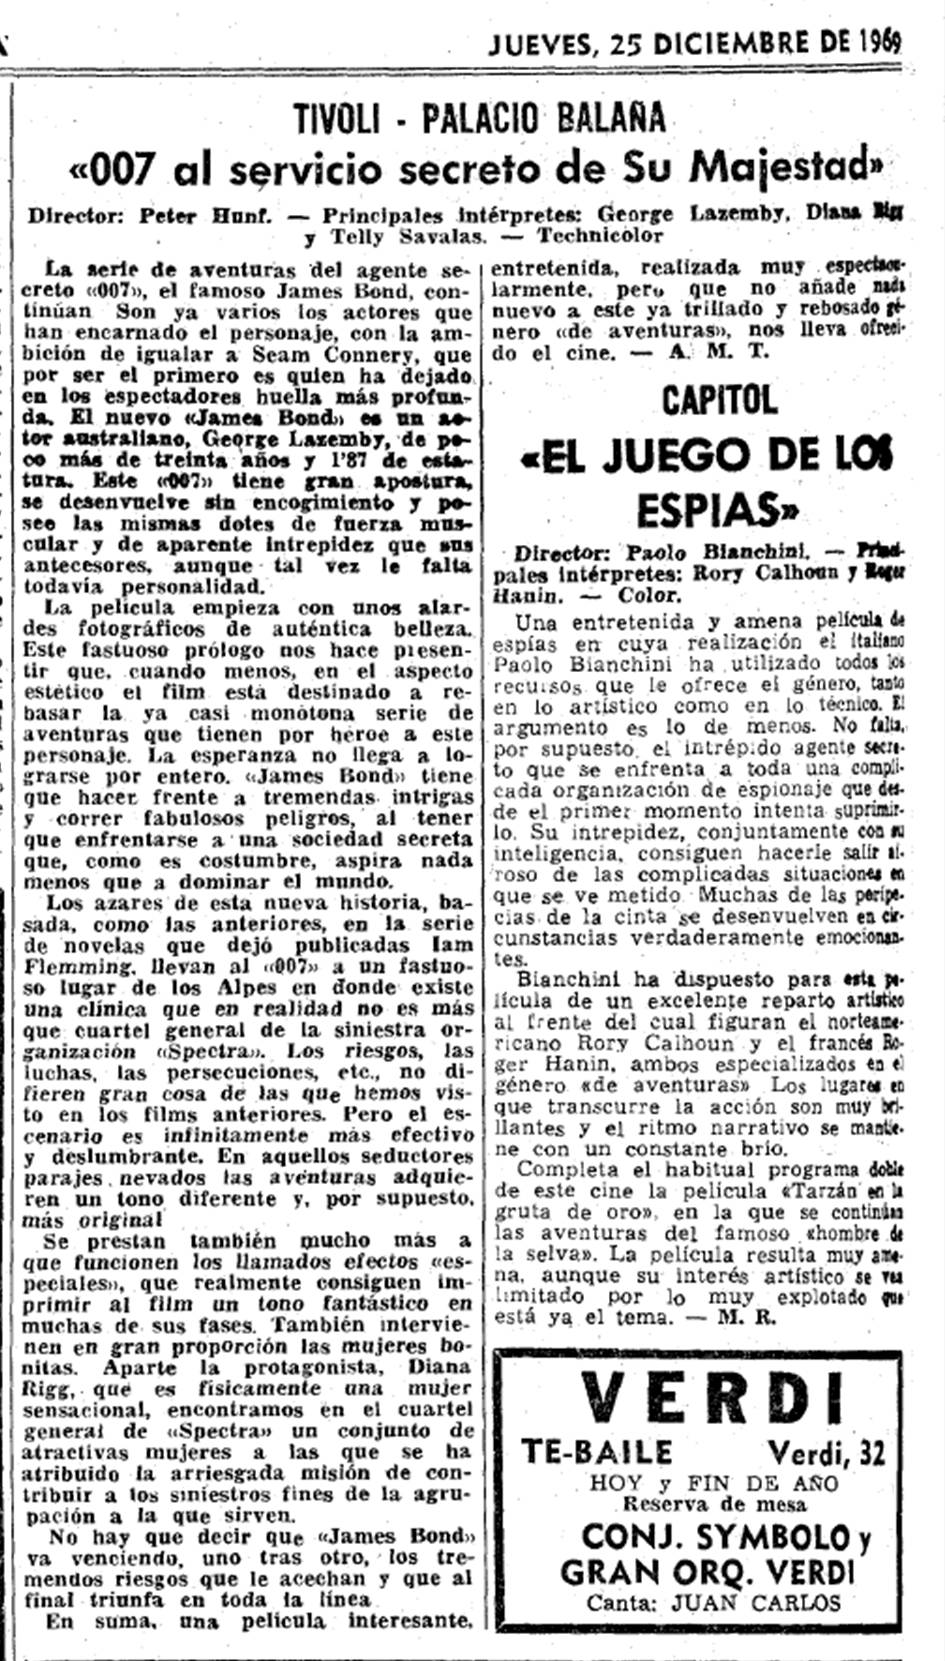 06 La Vanguardia 1969 12 25 Critica